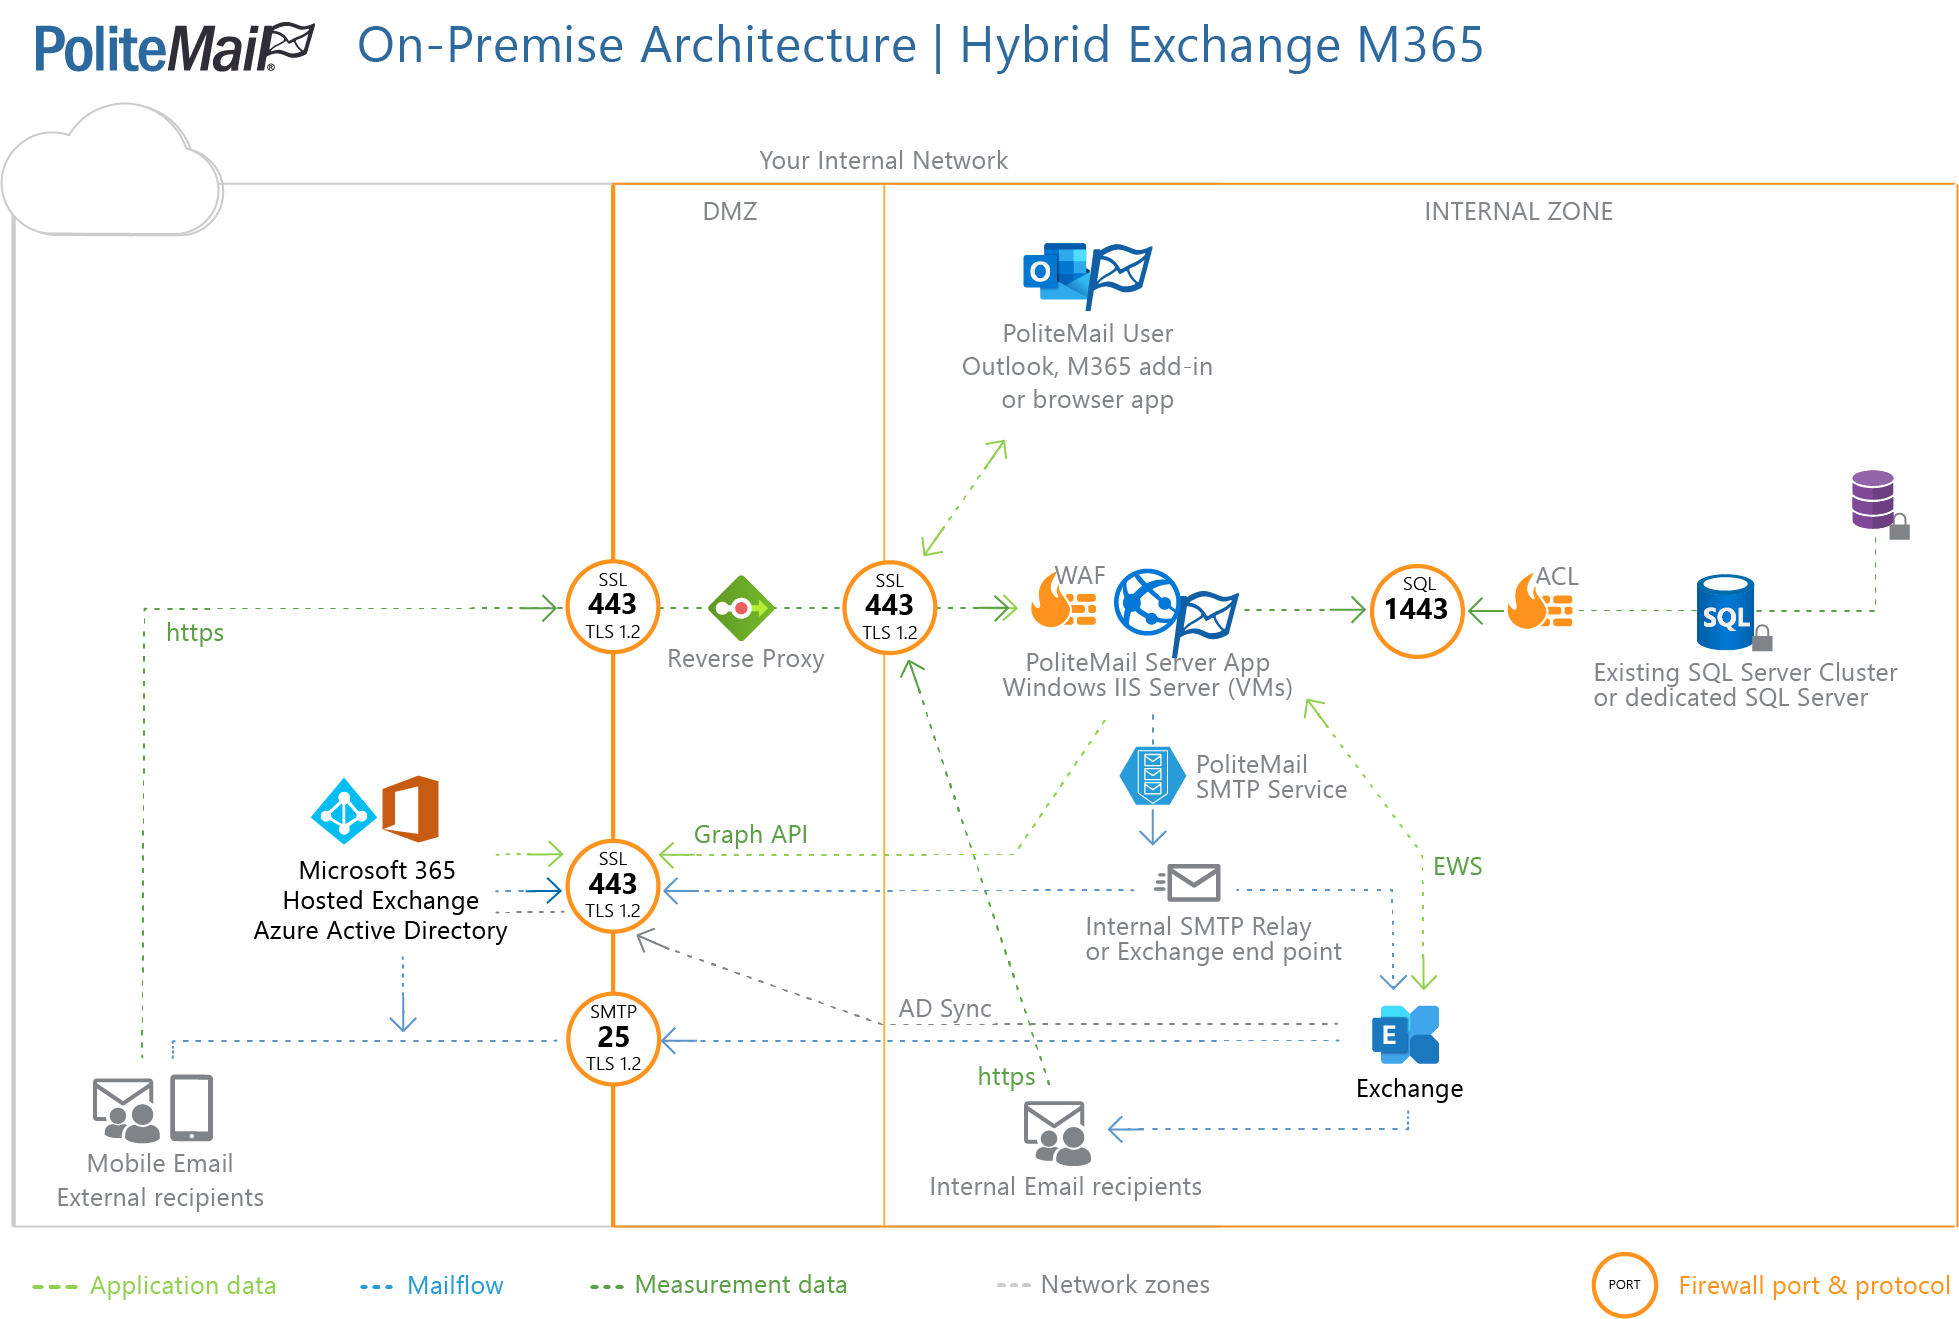 On-Premise Architecture, Hybrid Exchange M365